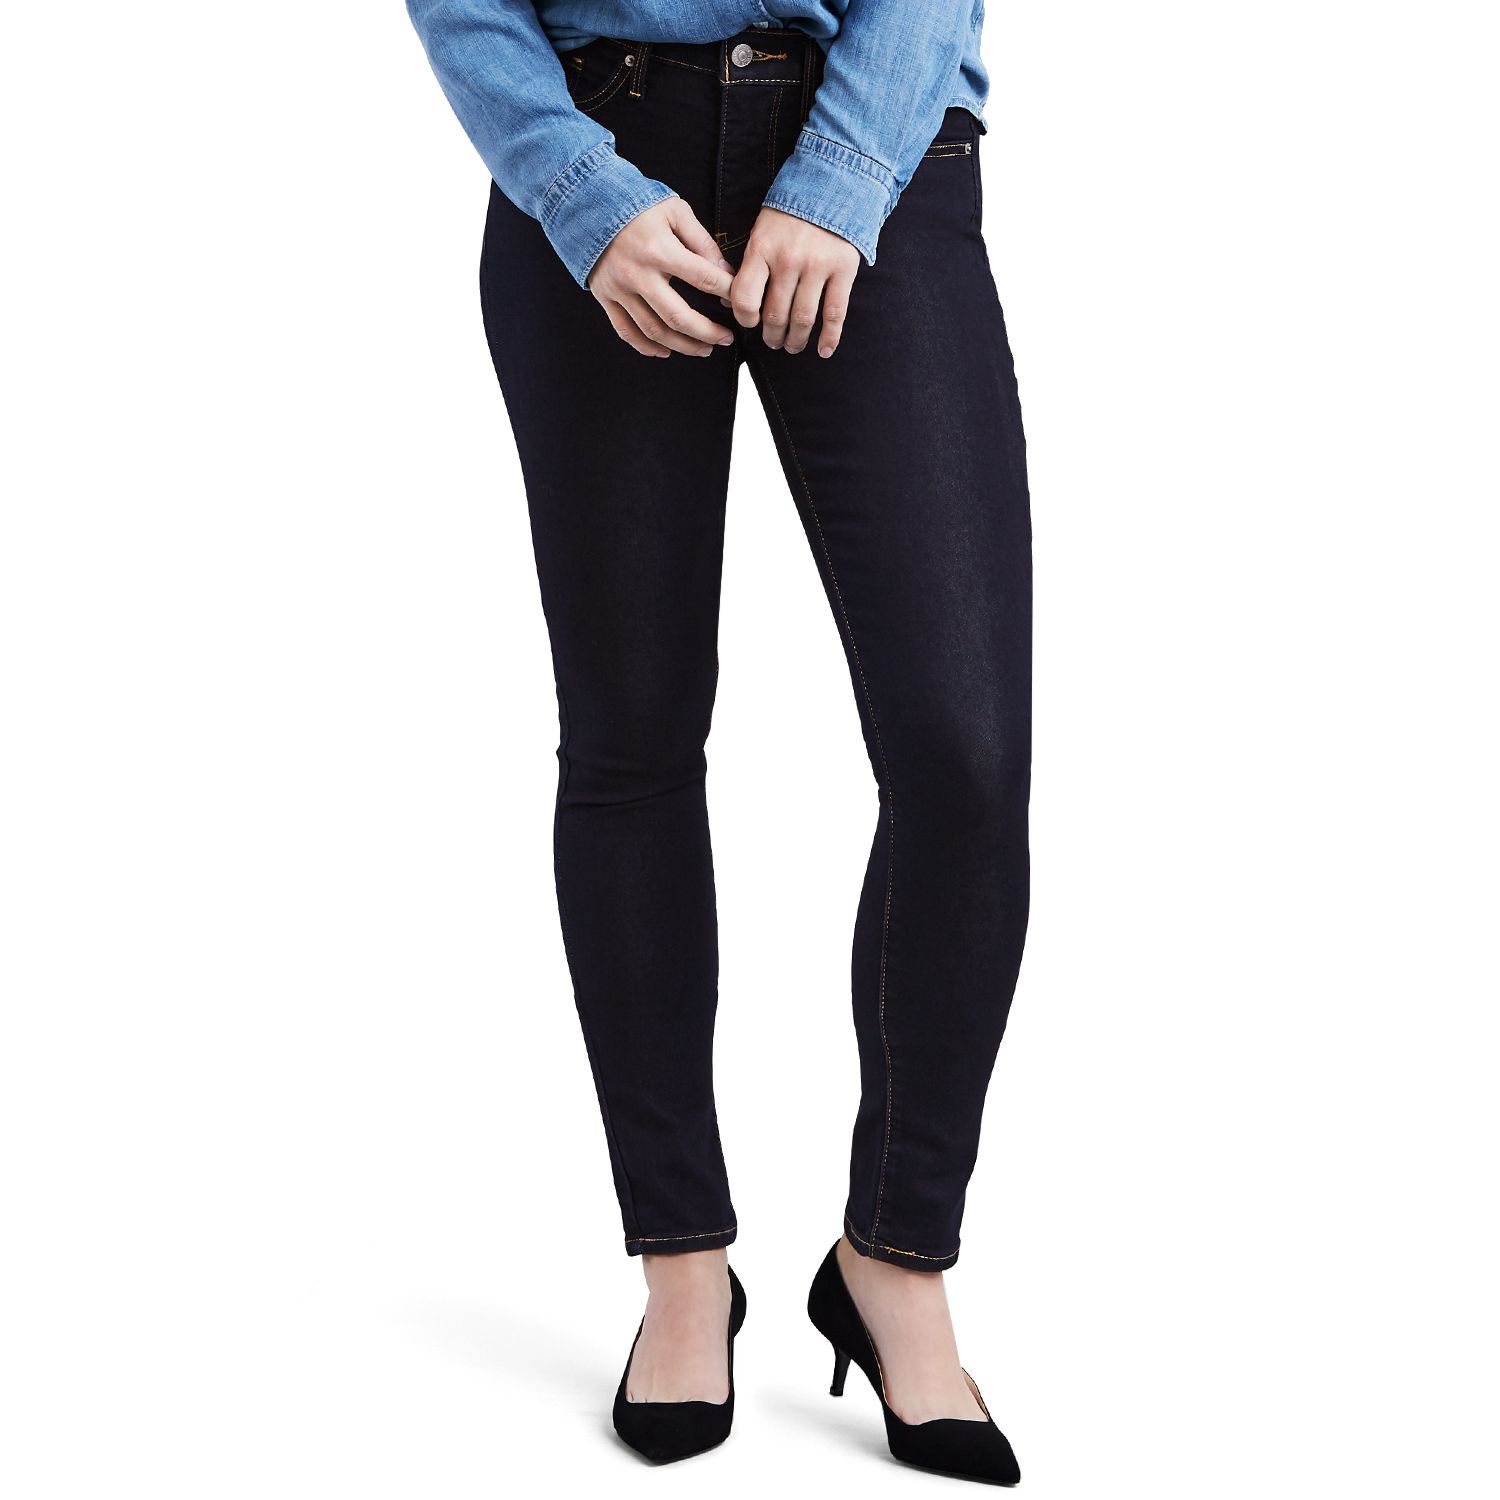 levi's mid rise skinny jeans colors